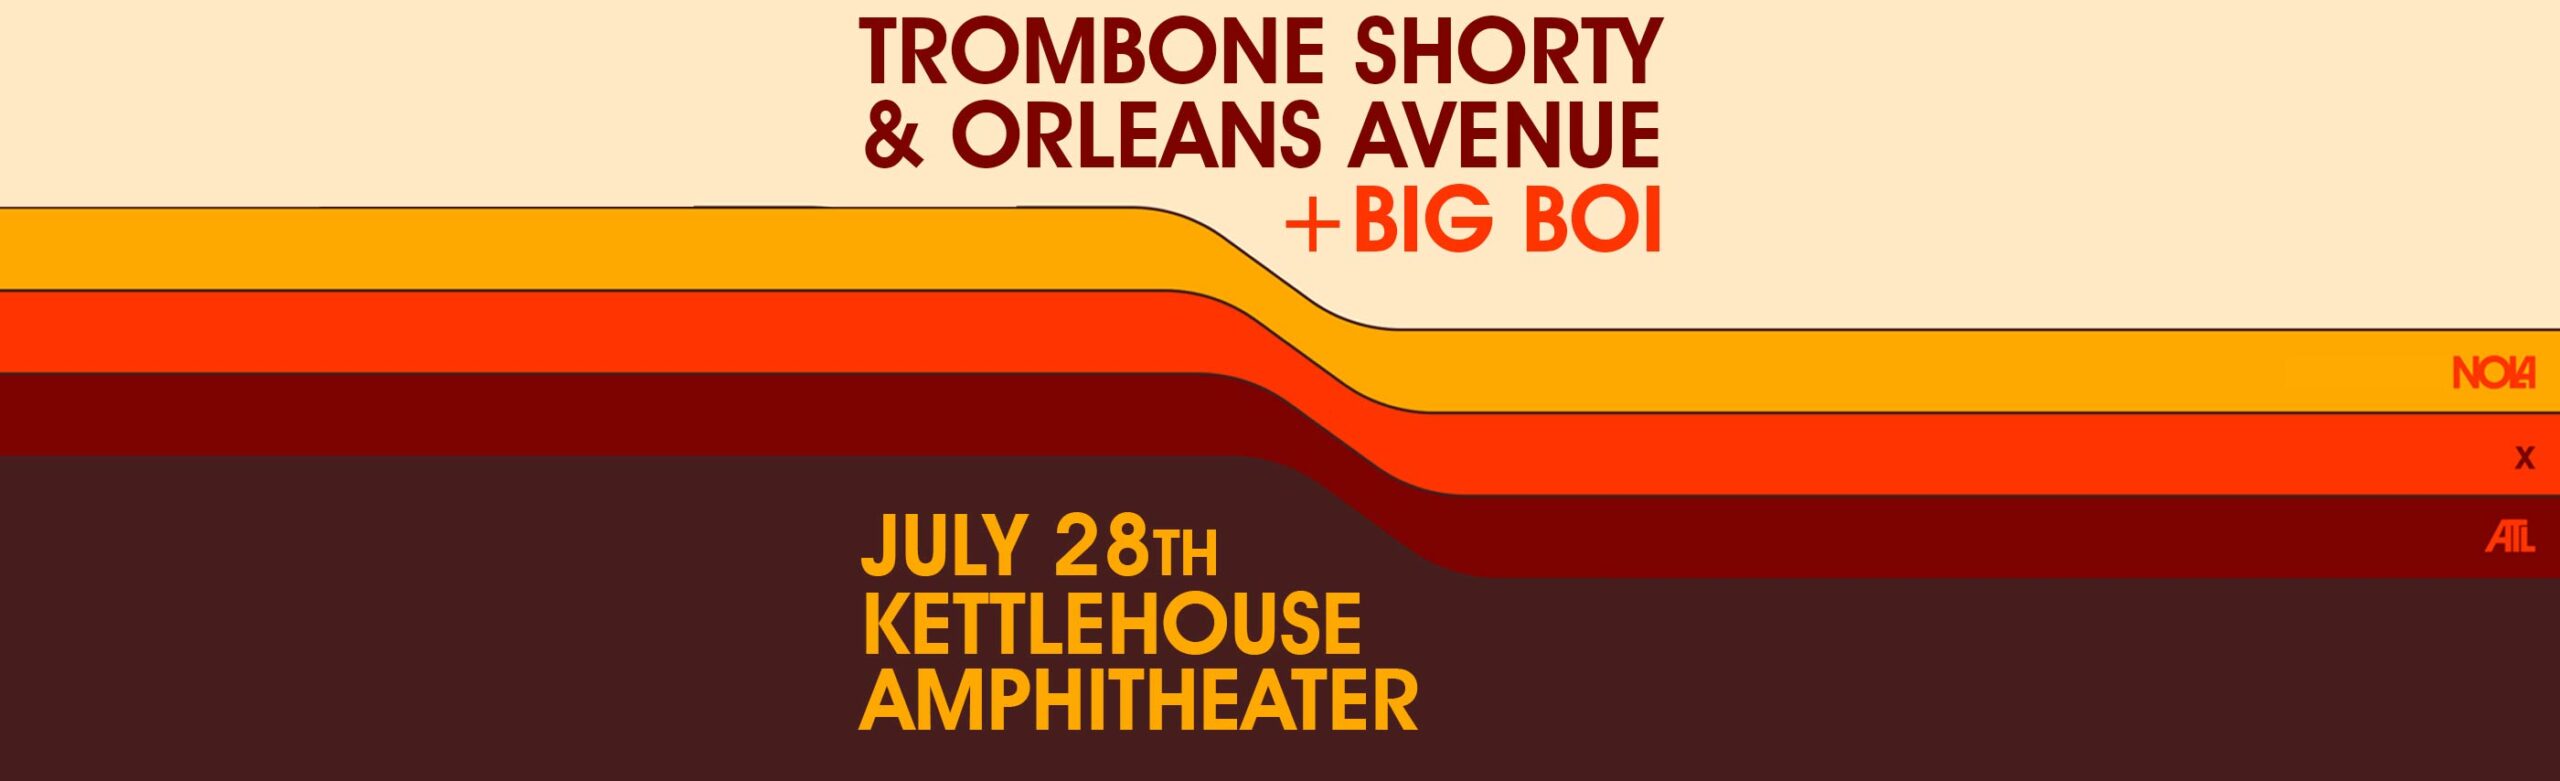 Trombone Shorty & Orleans Avenue with Big Boi